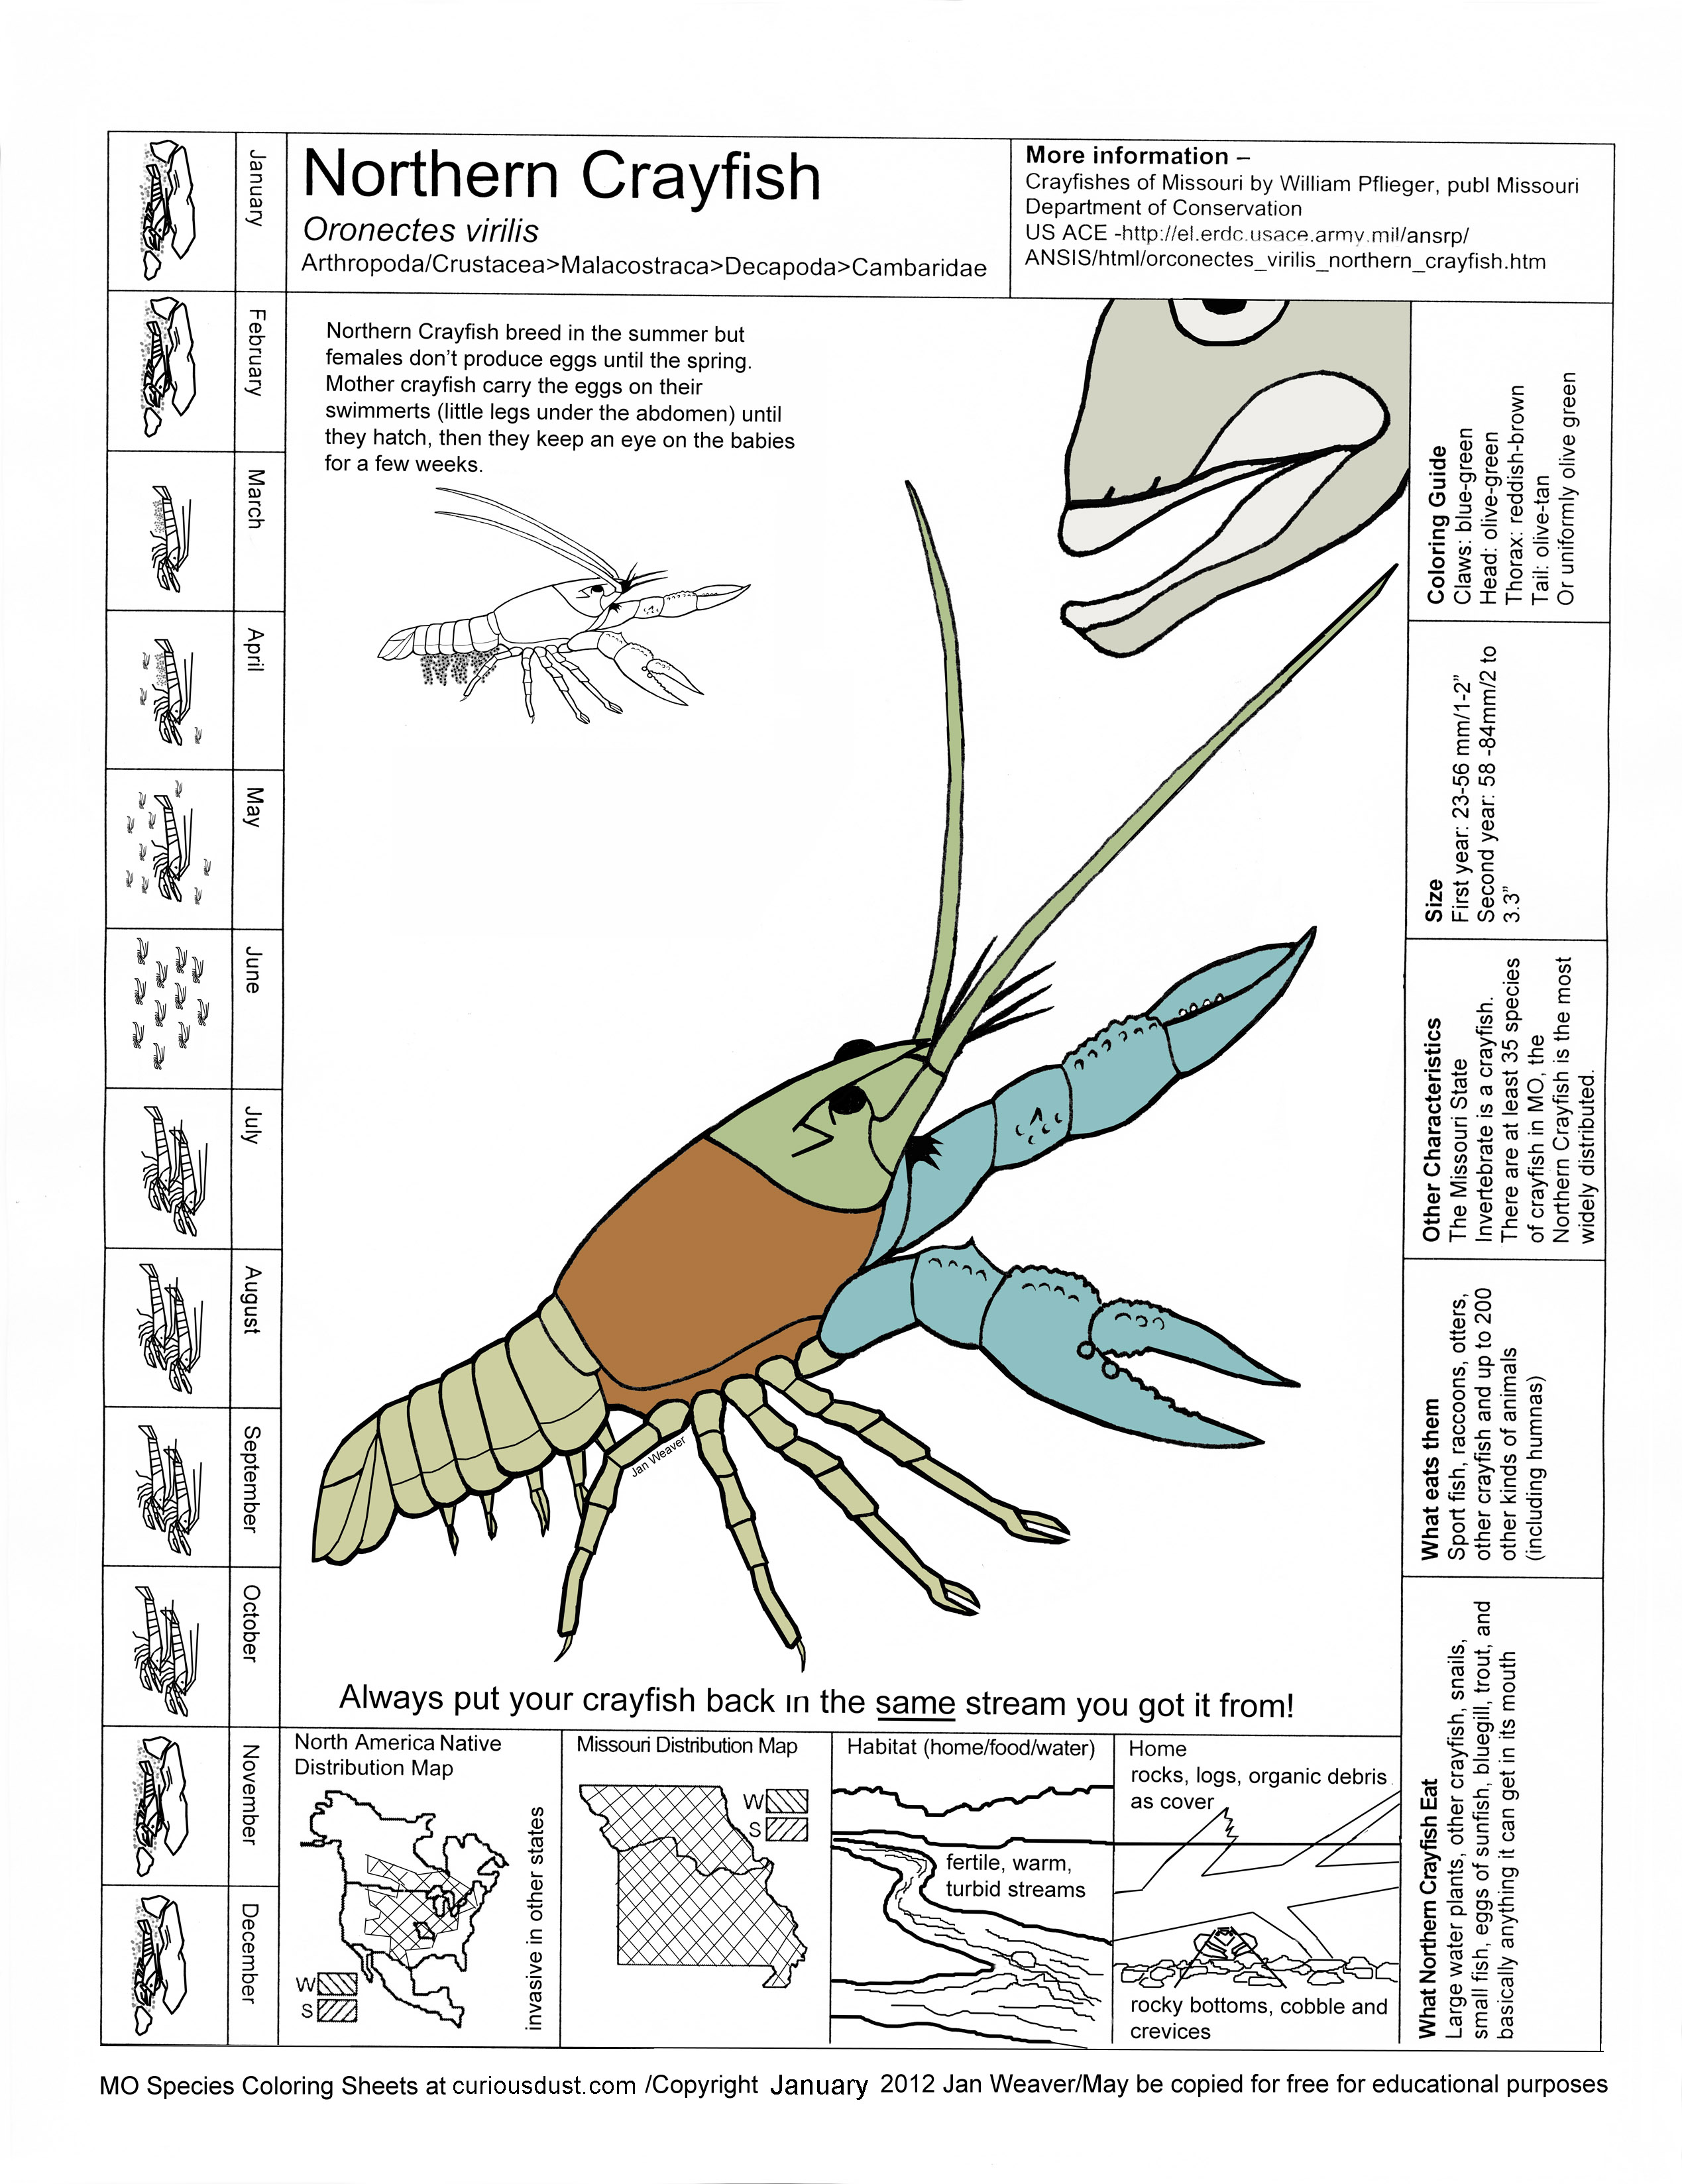 Northern Crayfish Image